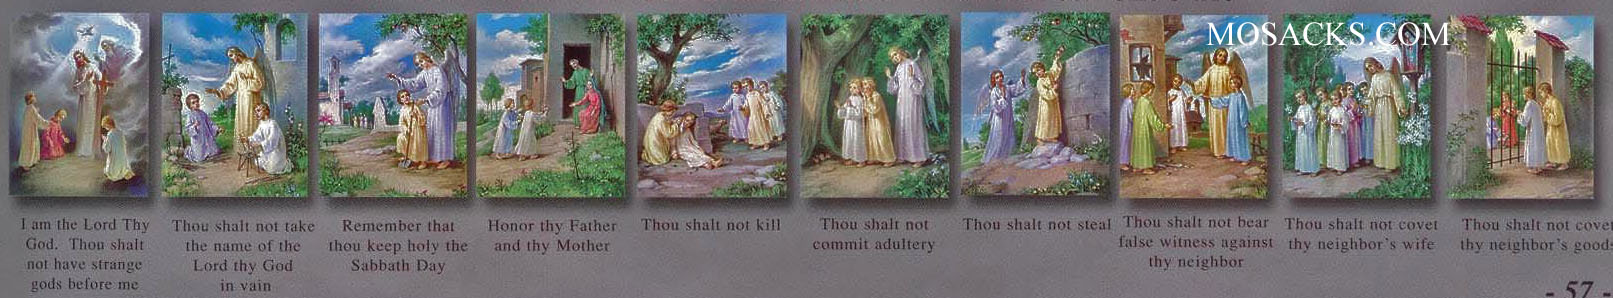 The Ten Commandments 8"x 10" Teaching Aid Poster Set 1475